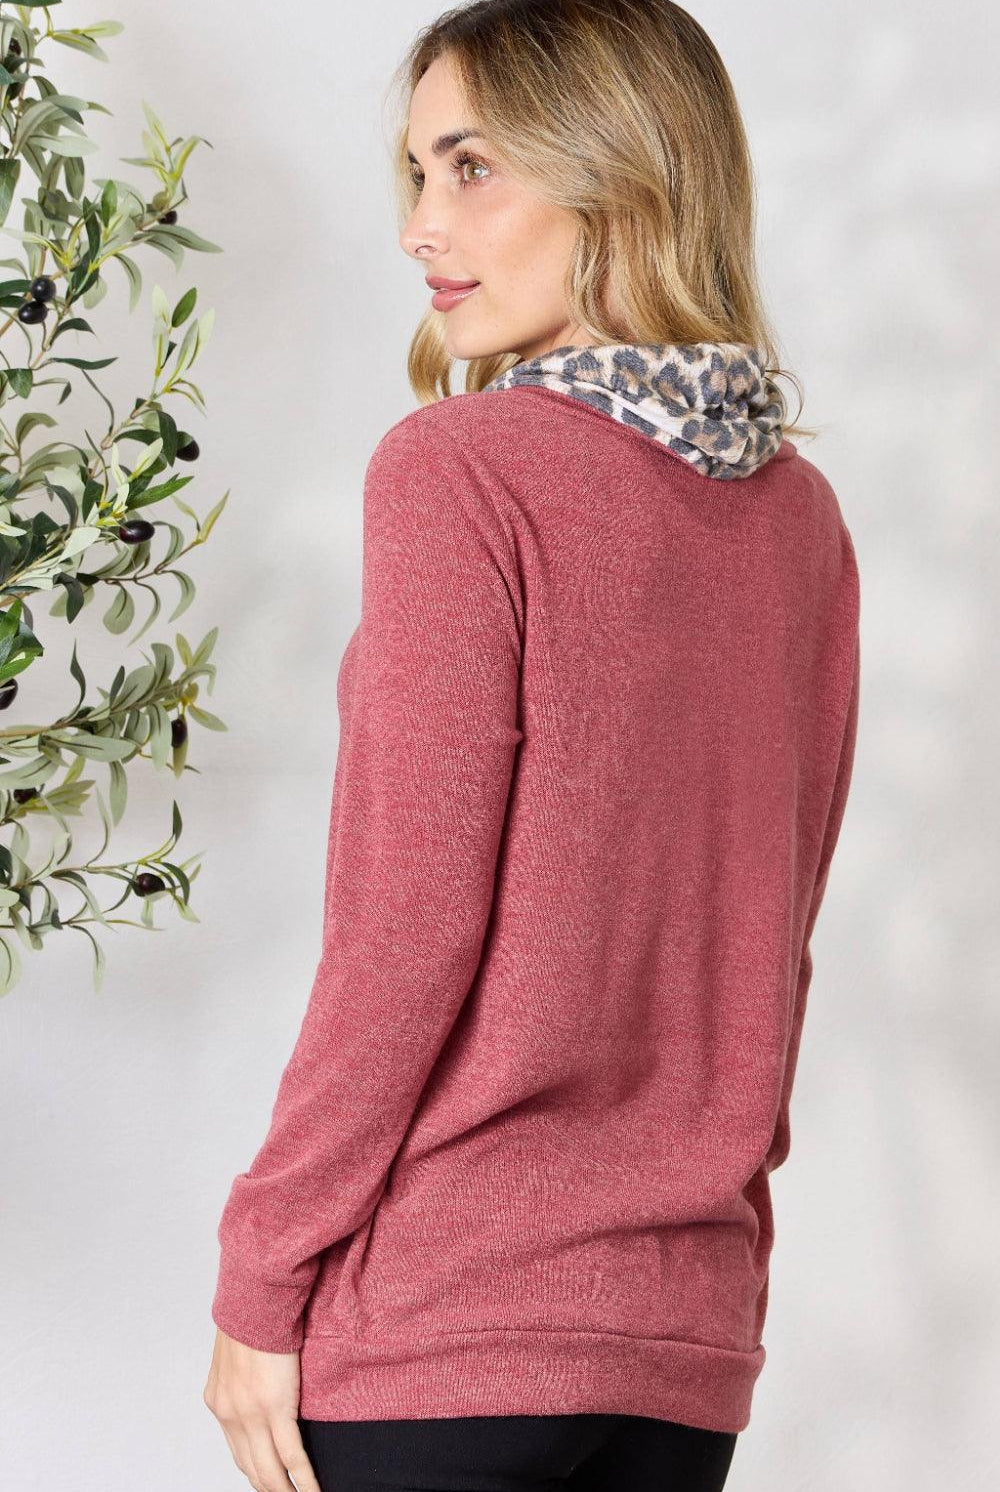 Women's Shirts BiBi Leopard Drawstring Long Sleeve Top